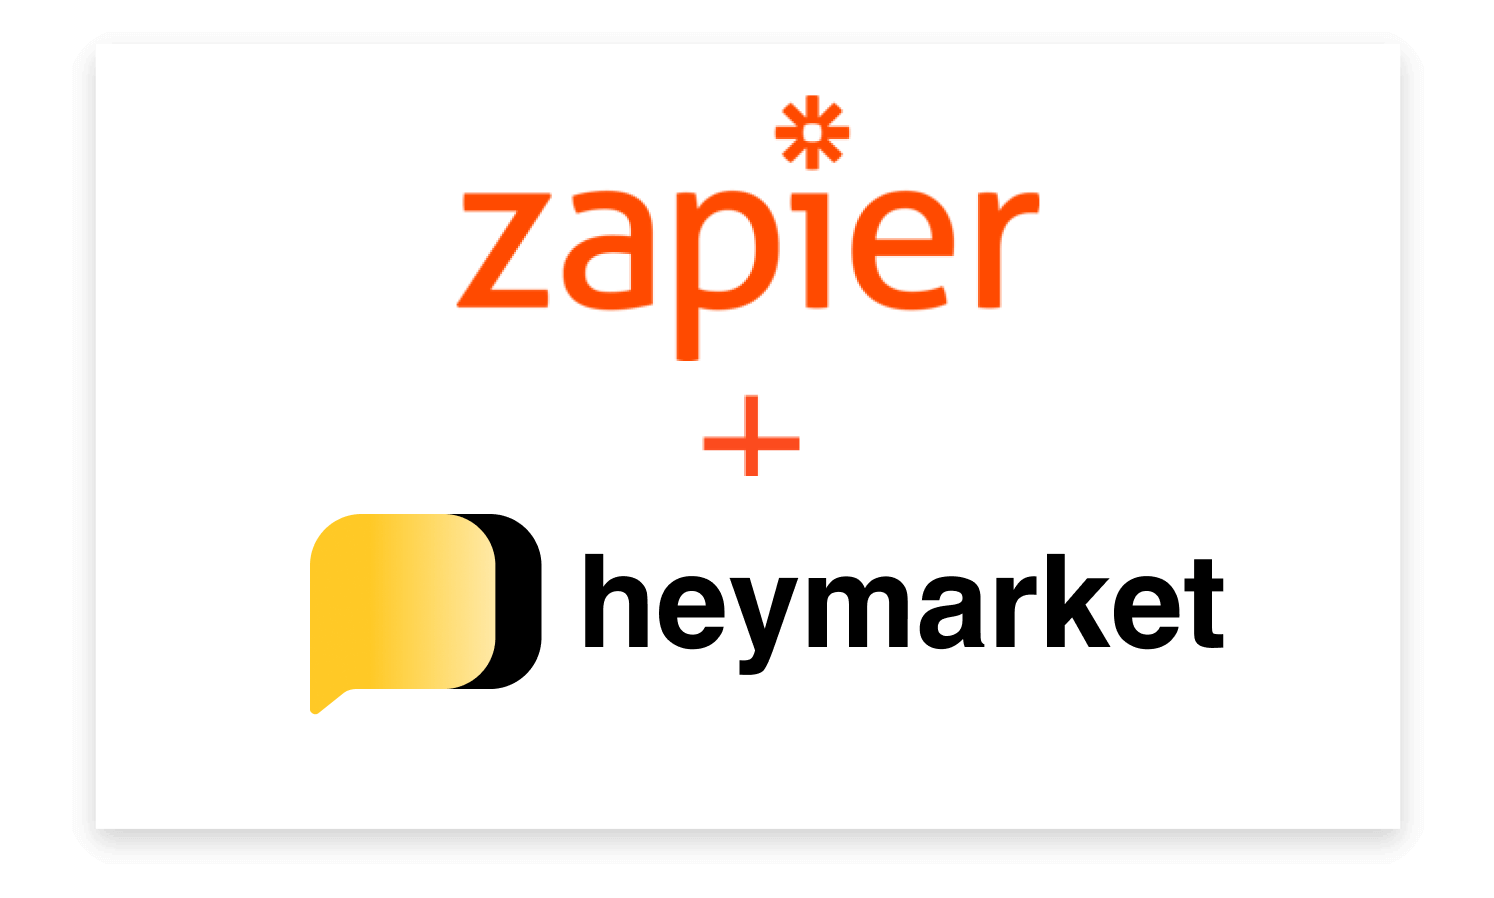 Zapier and Heymarket logos.